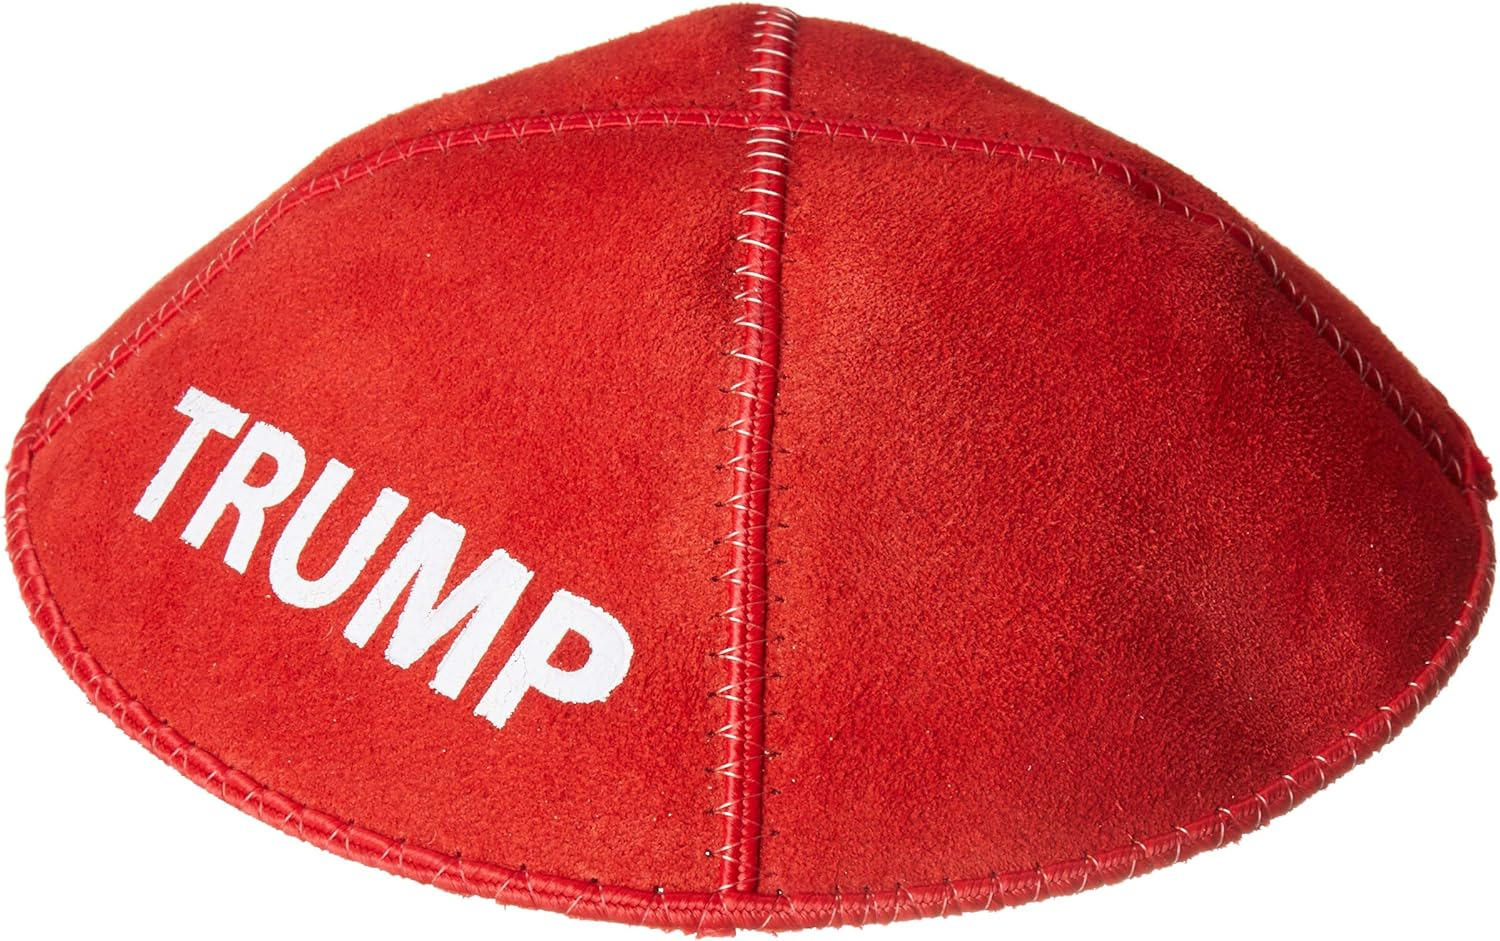 Trump MAGA Jewish Yarmulke Hat - Red Suede Kippah for Men/Boys - US Made